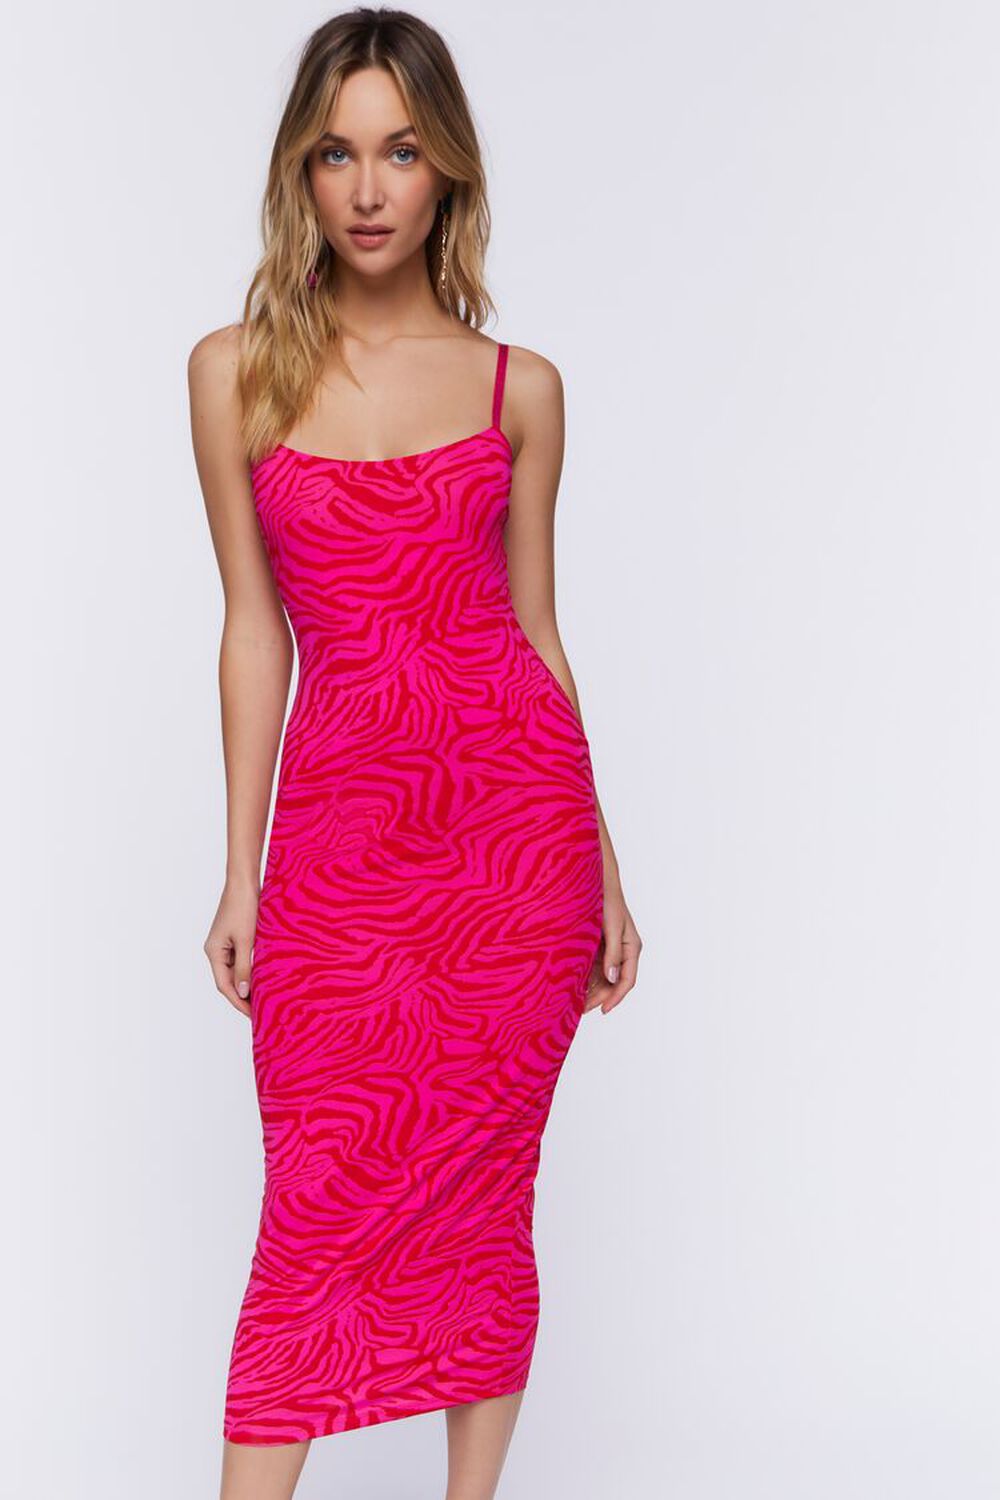 hot pink and zebra dresses